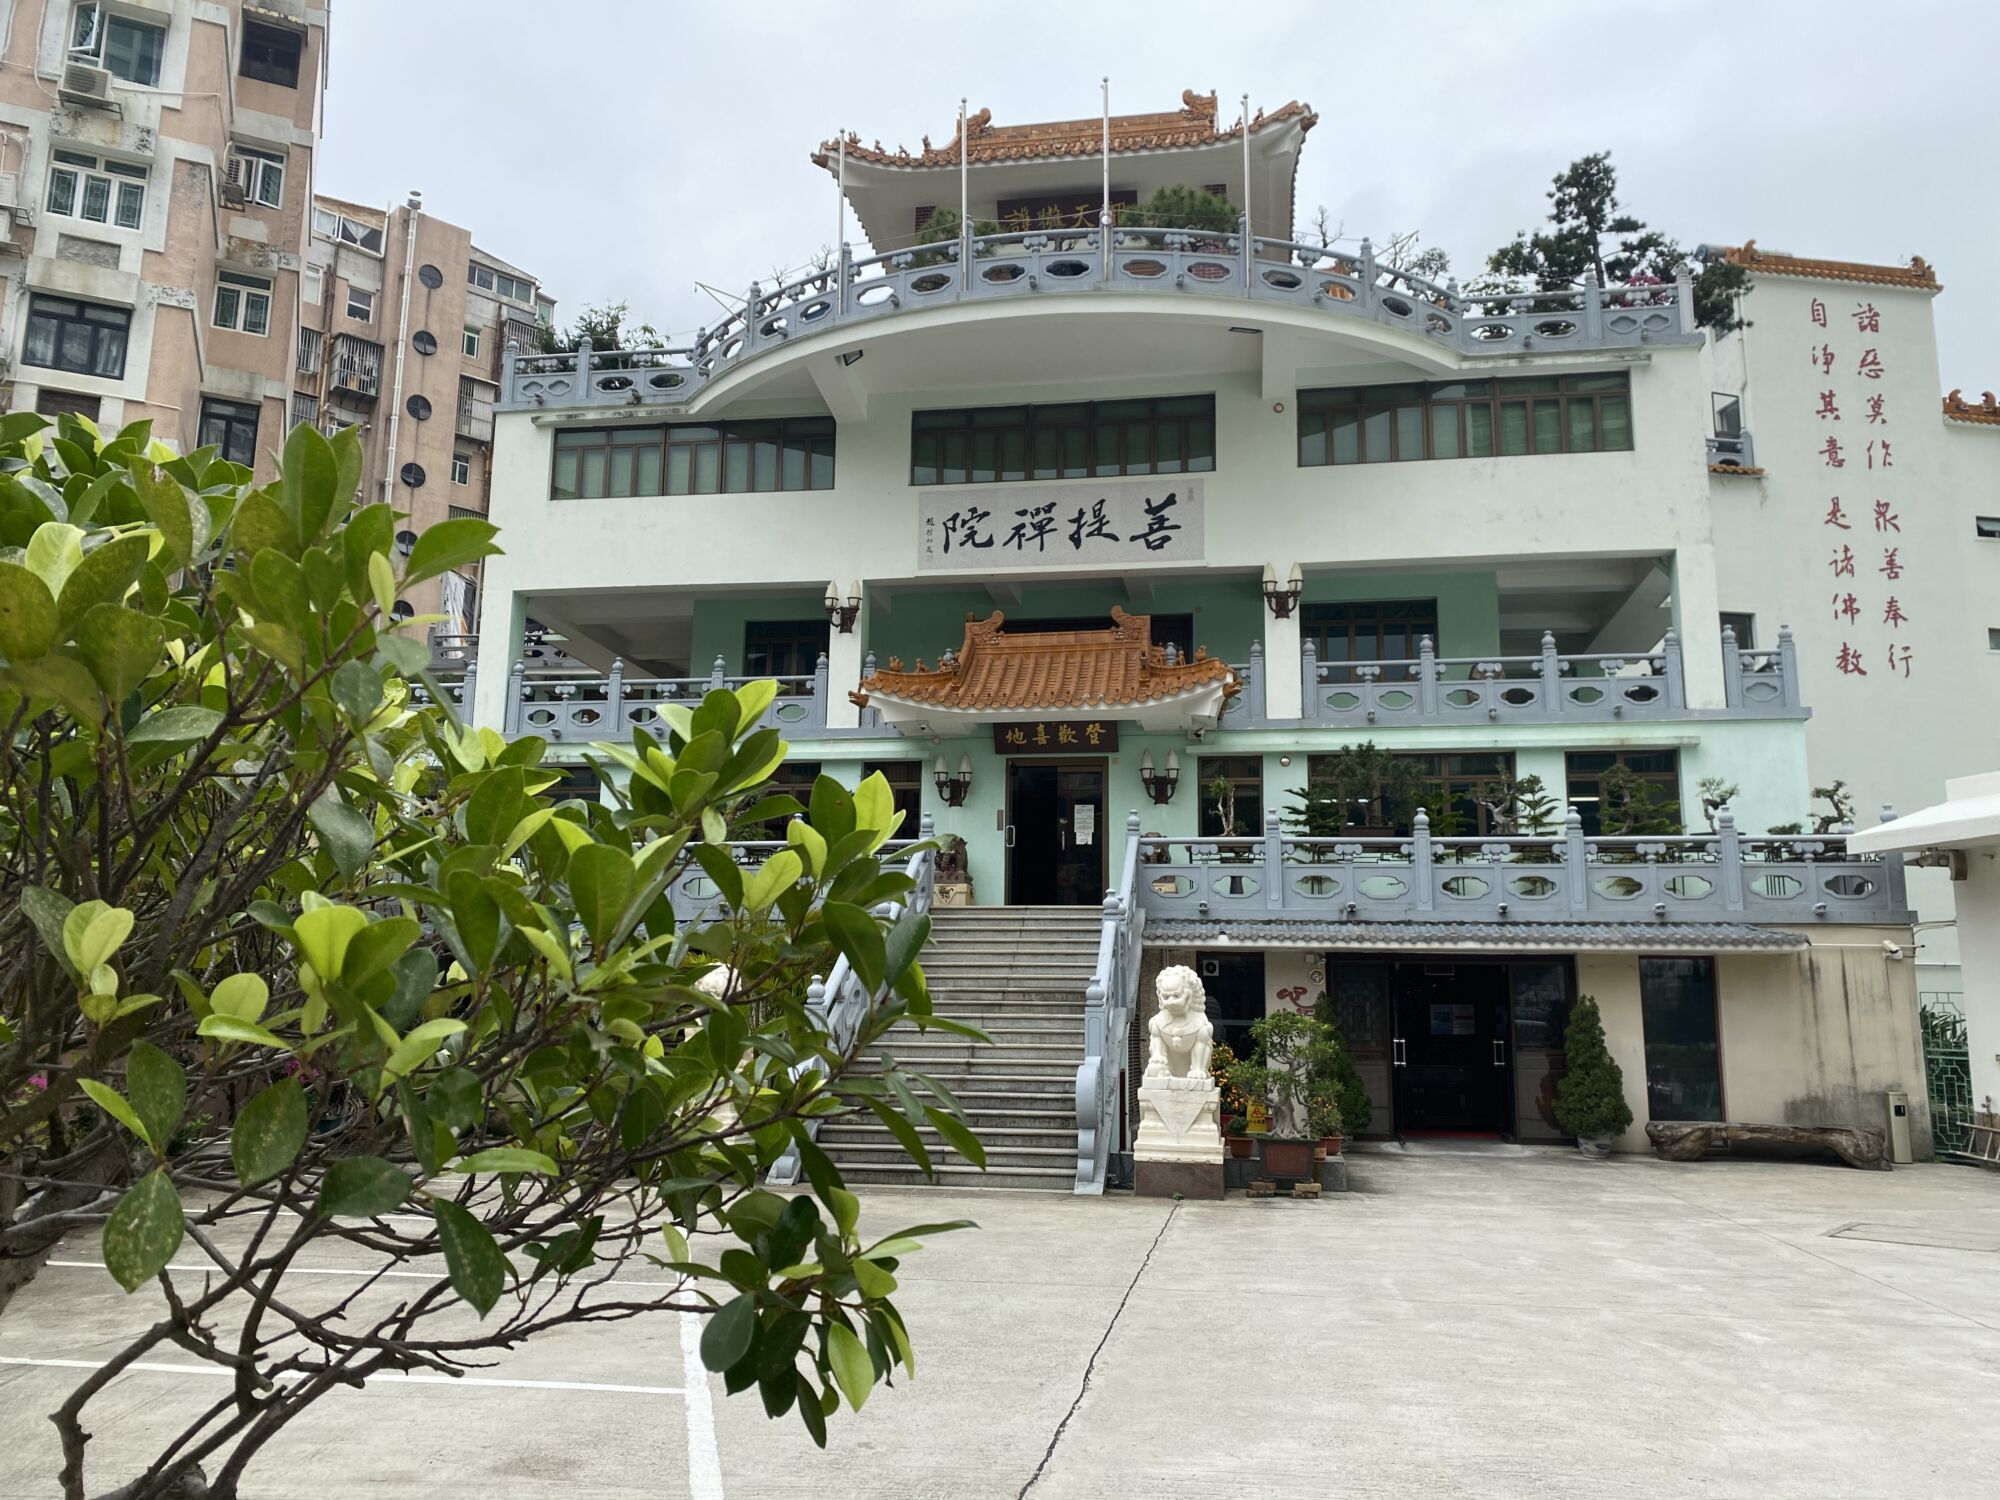 sum yuen vegetarian restaurant buddhist temple taipa building front